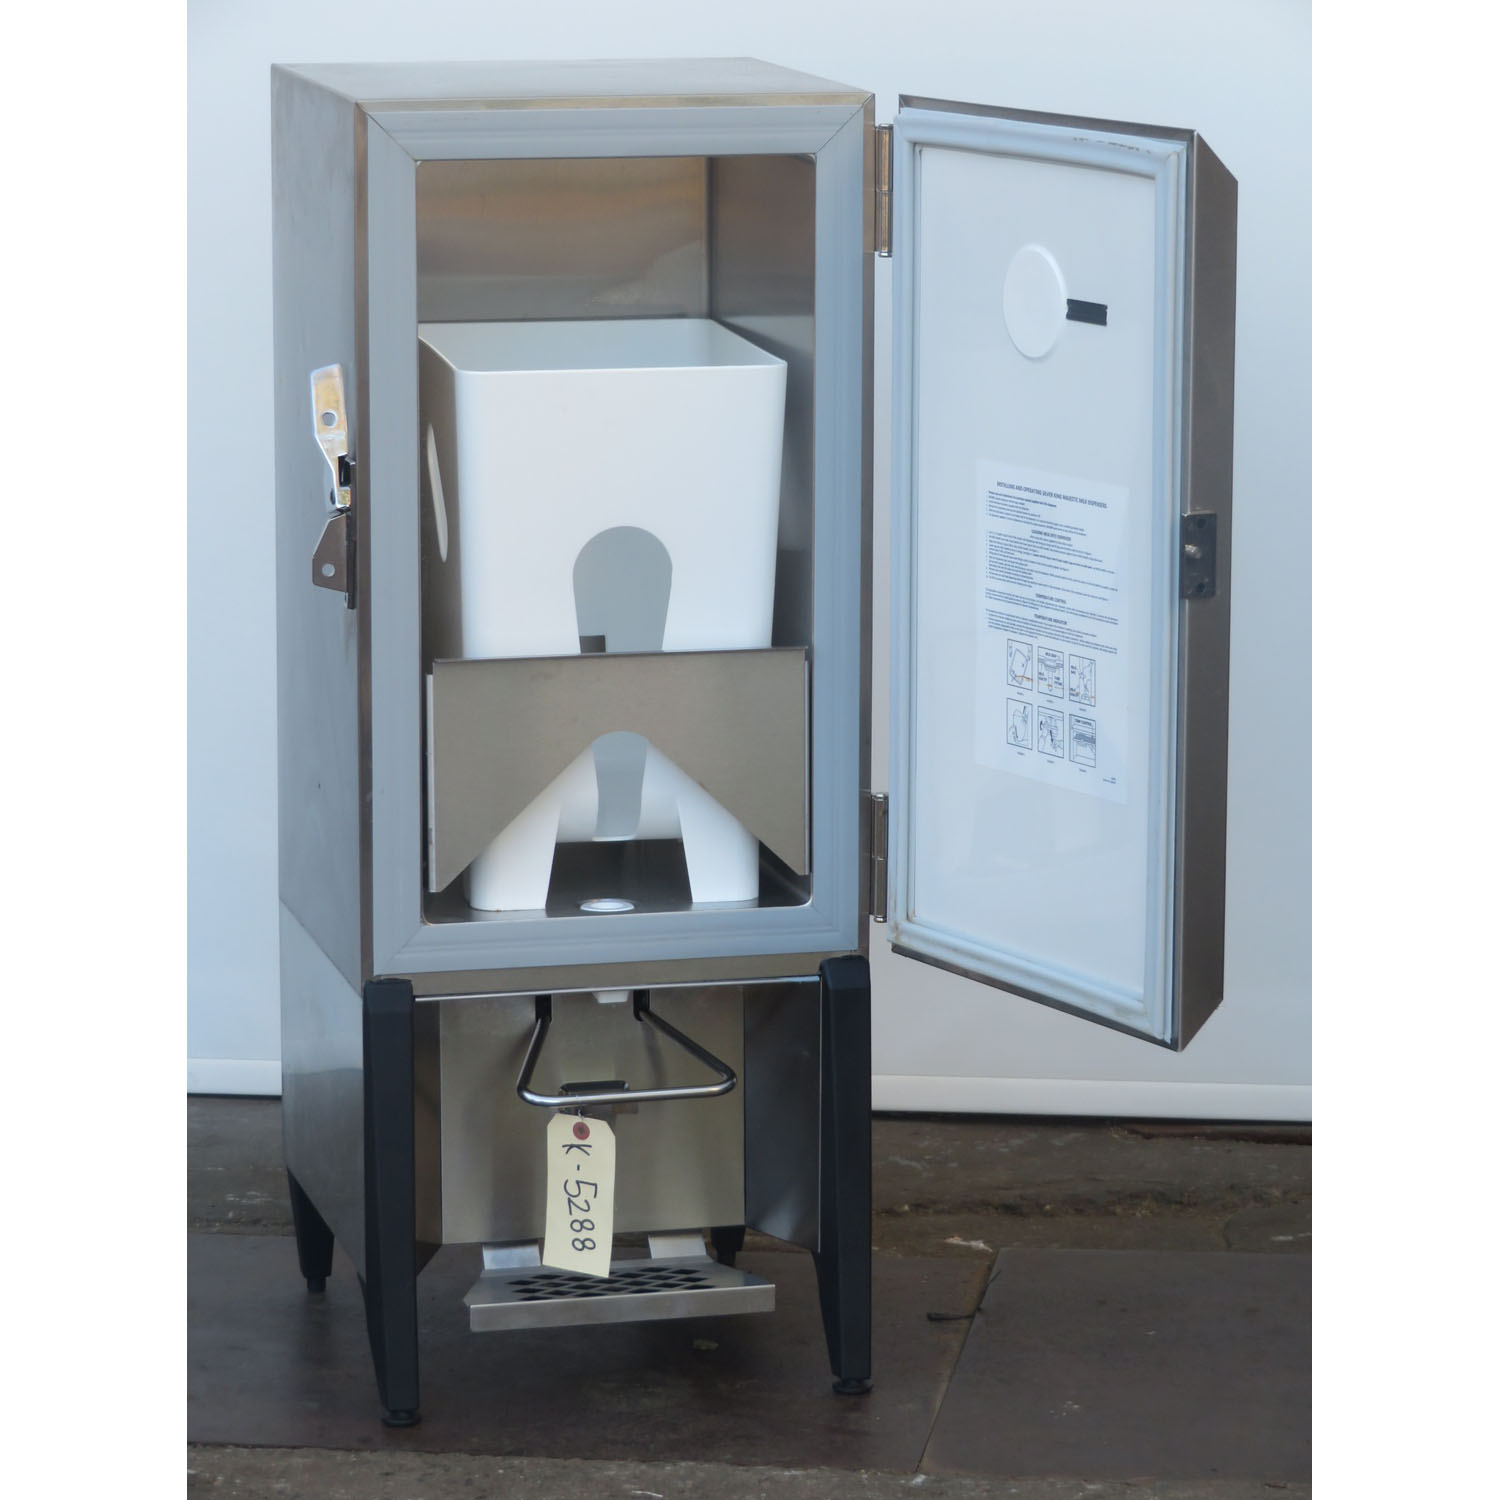 Silver King SKMAJ1-C4 Milk Dispenser, Used Great Condition image 1